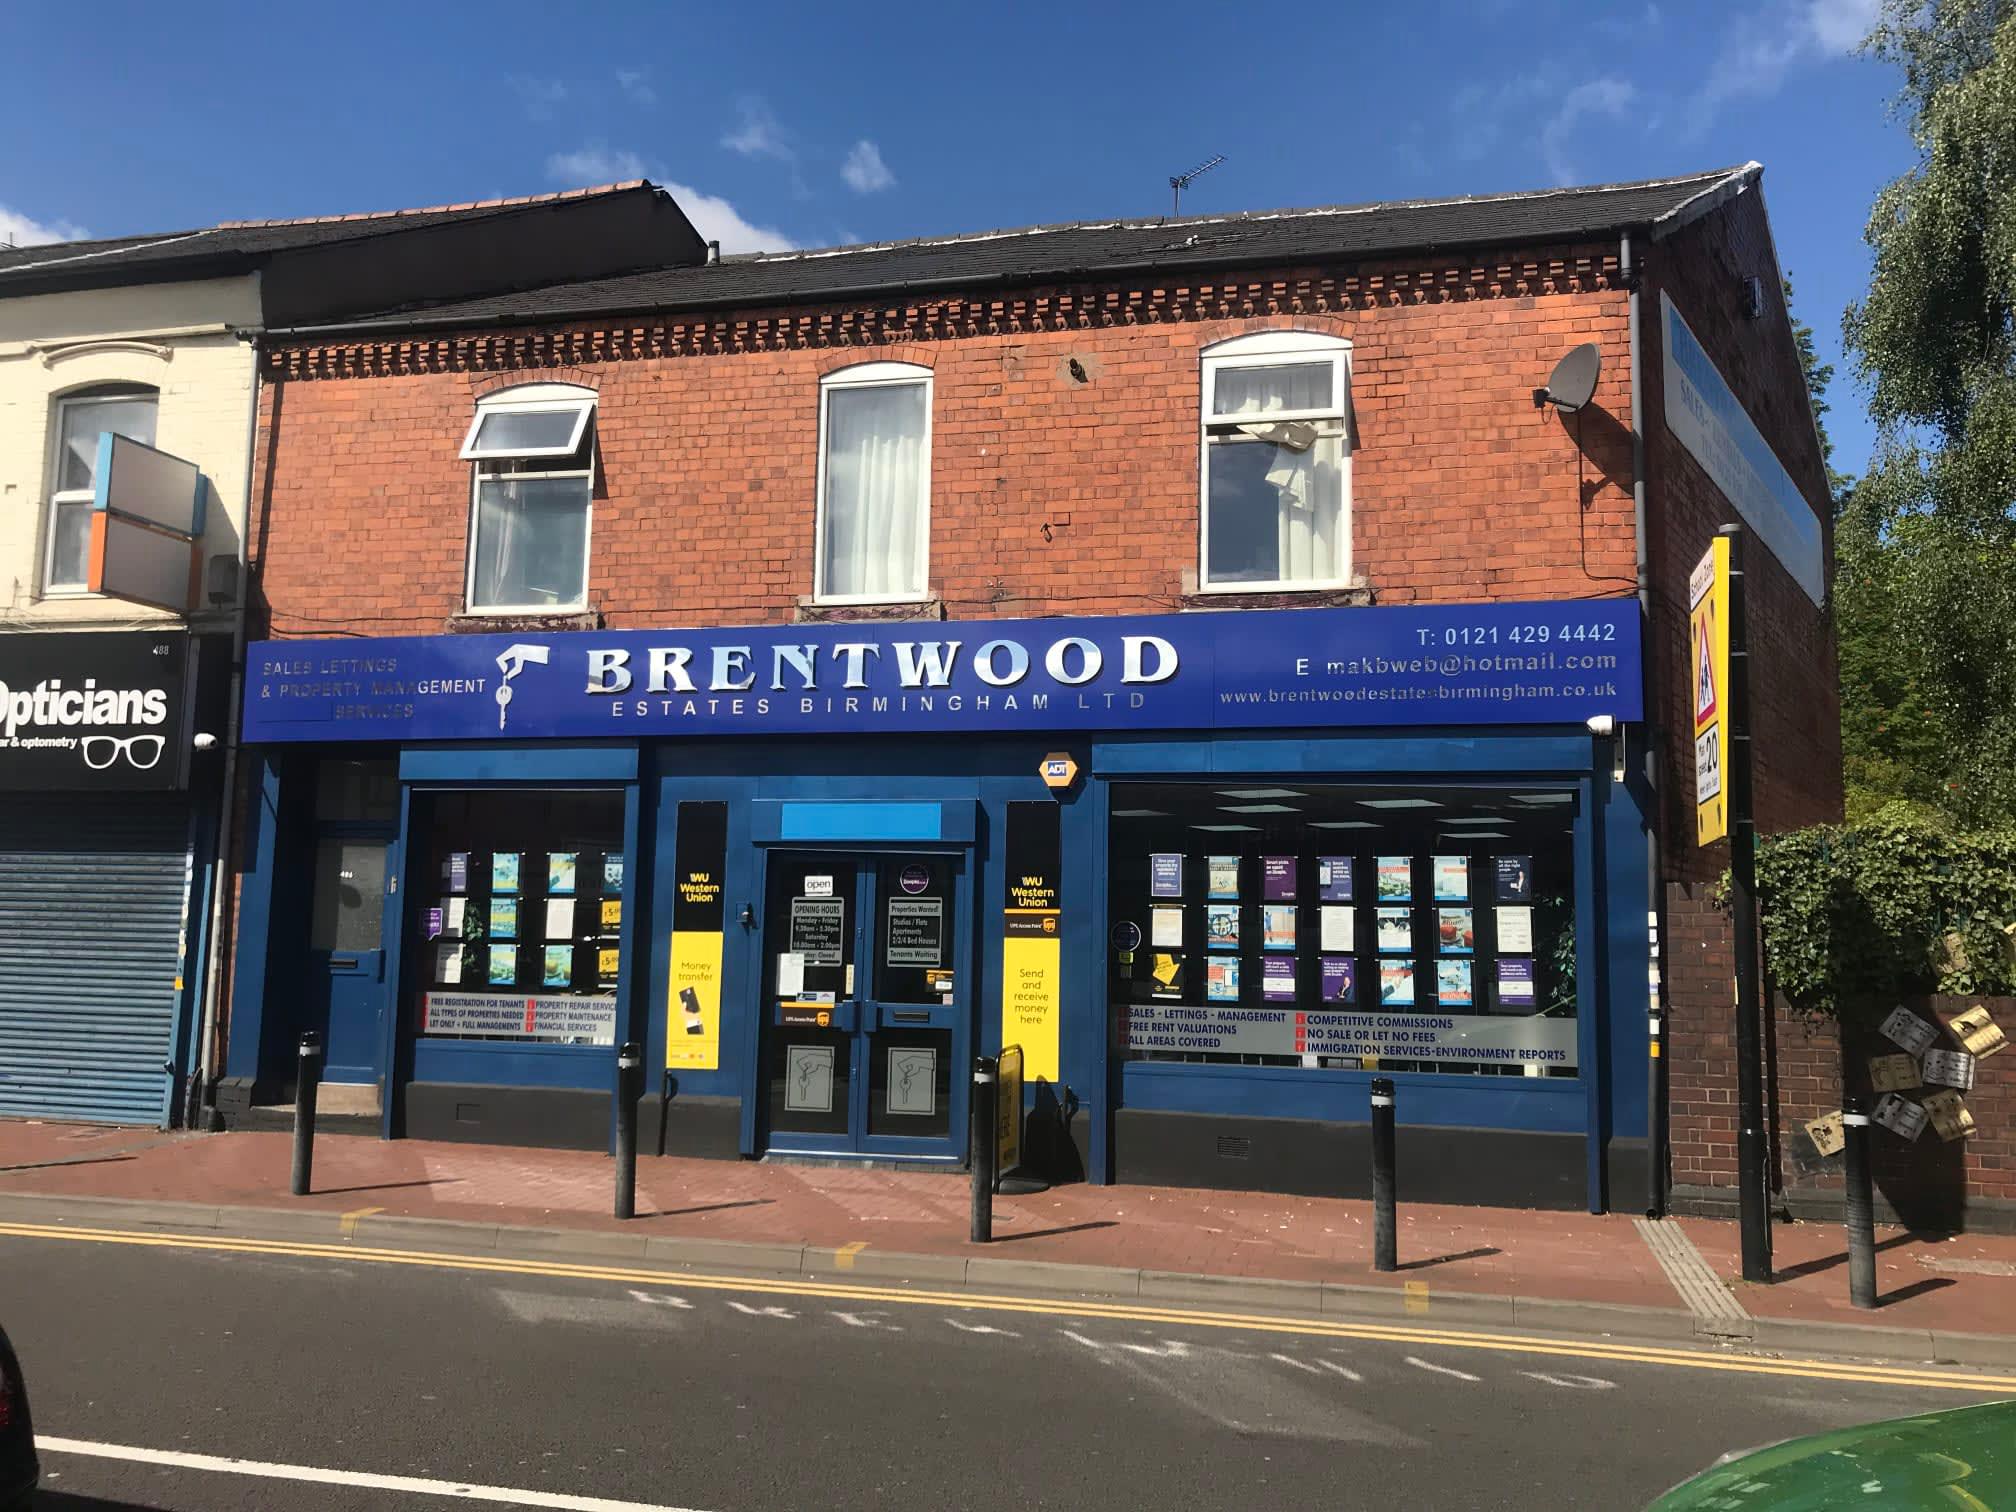 Images Brentwood Estates Birmingham Ltd